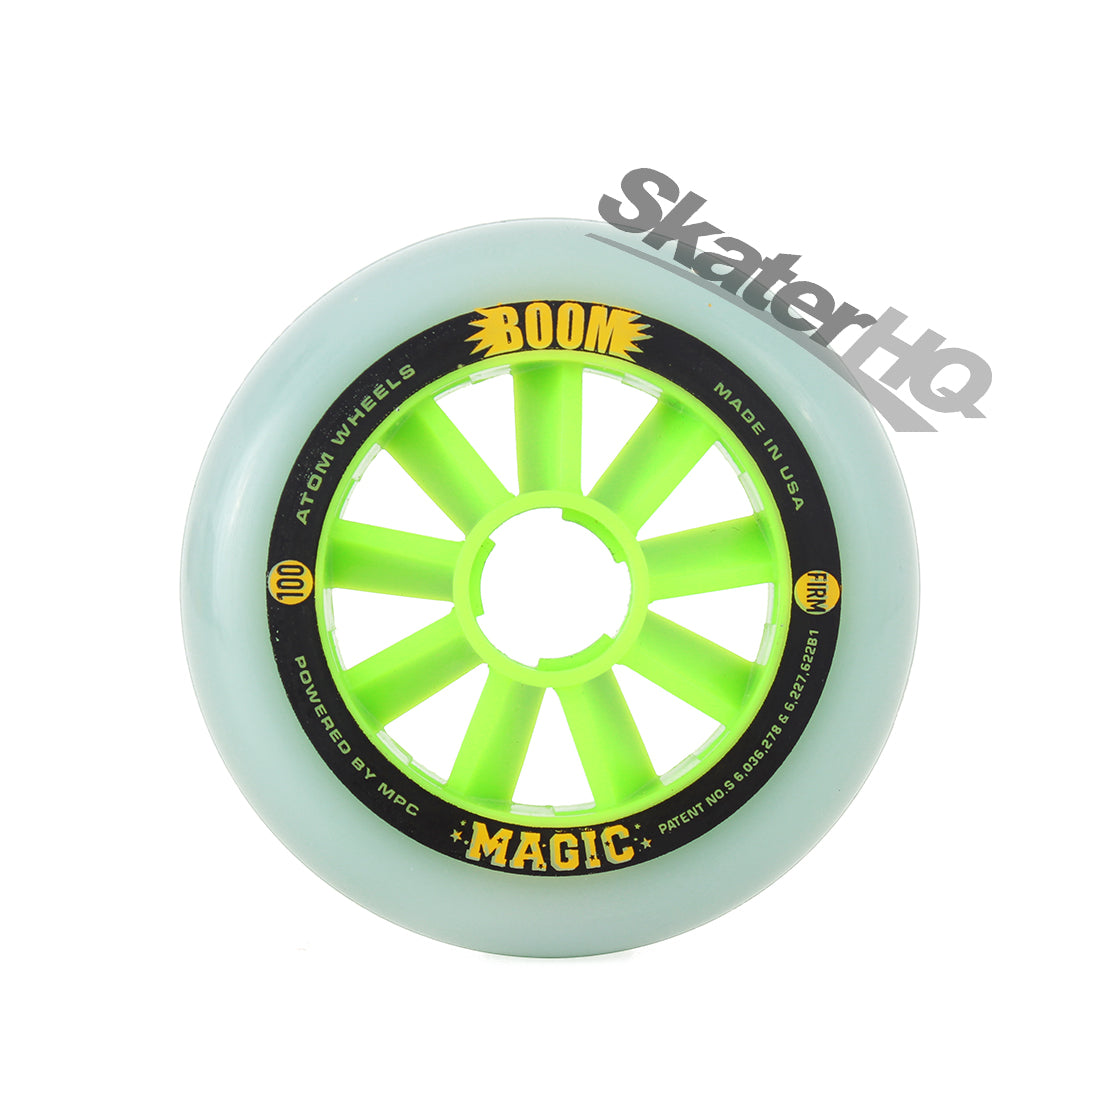 Atom Boom Magic 100mm Firm - SINGLE Inline Rec Wheels